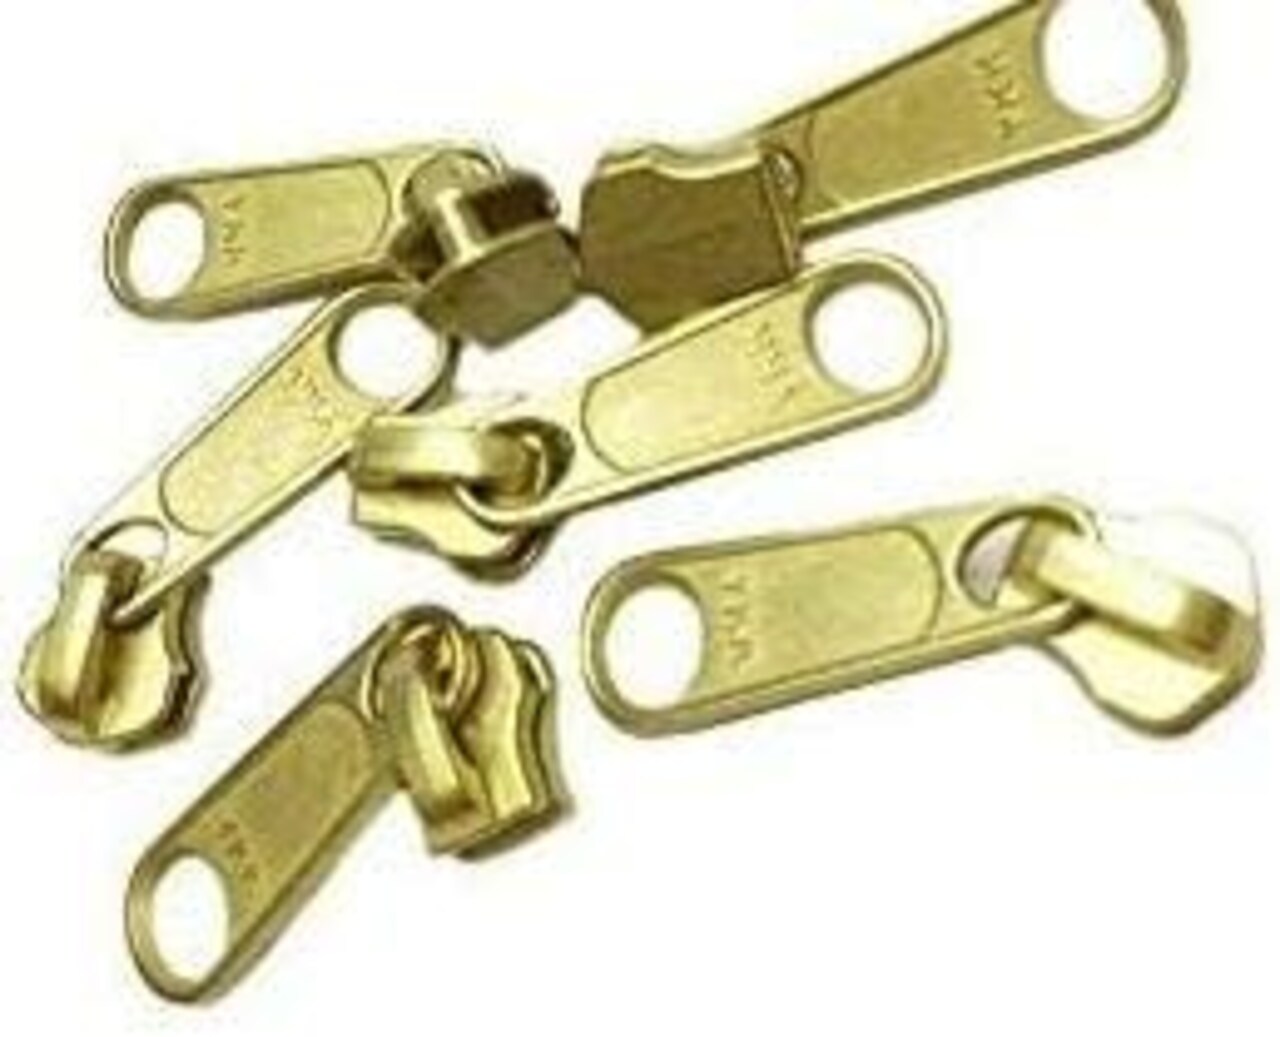 YKK - Zipper Repair Kit Solution, 5 Brass Metal Your Choice of Fancy Pulls  of YKK #5 Brass Slider Made in USA - 12 Pulls Per Pack (Handbag Long Pull  Non Lock Slider)